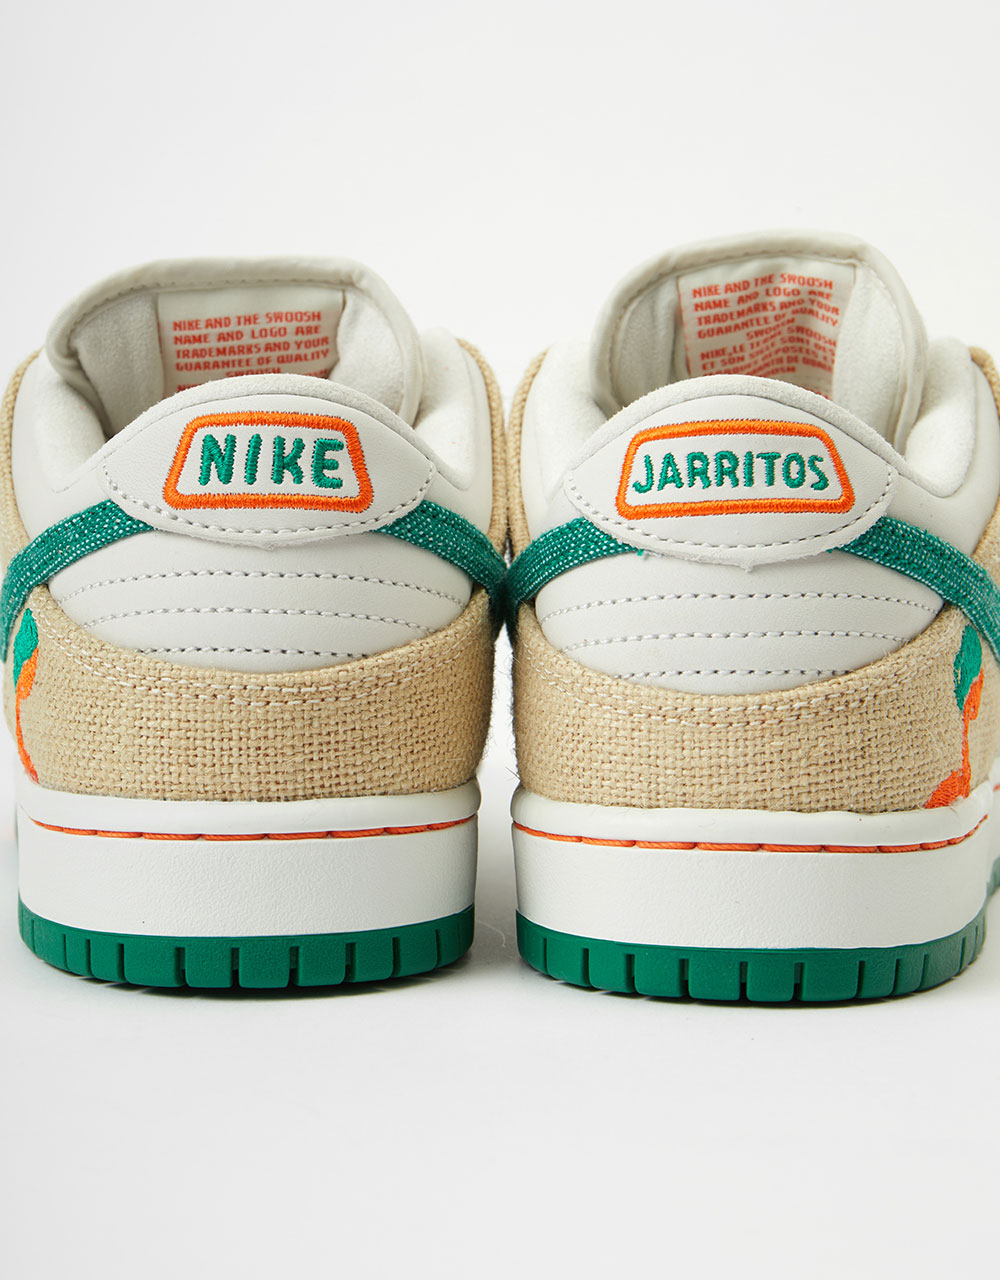 Nike SB 'Jarritos' Dunk Low Pro QS Skate Shoes - Phantom/Safety Orange-Malachite